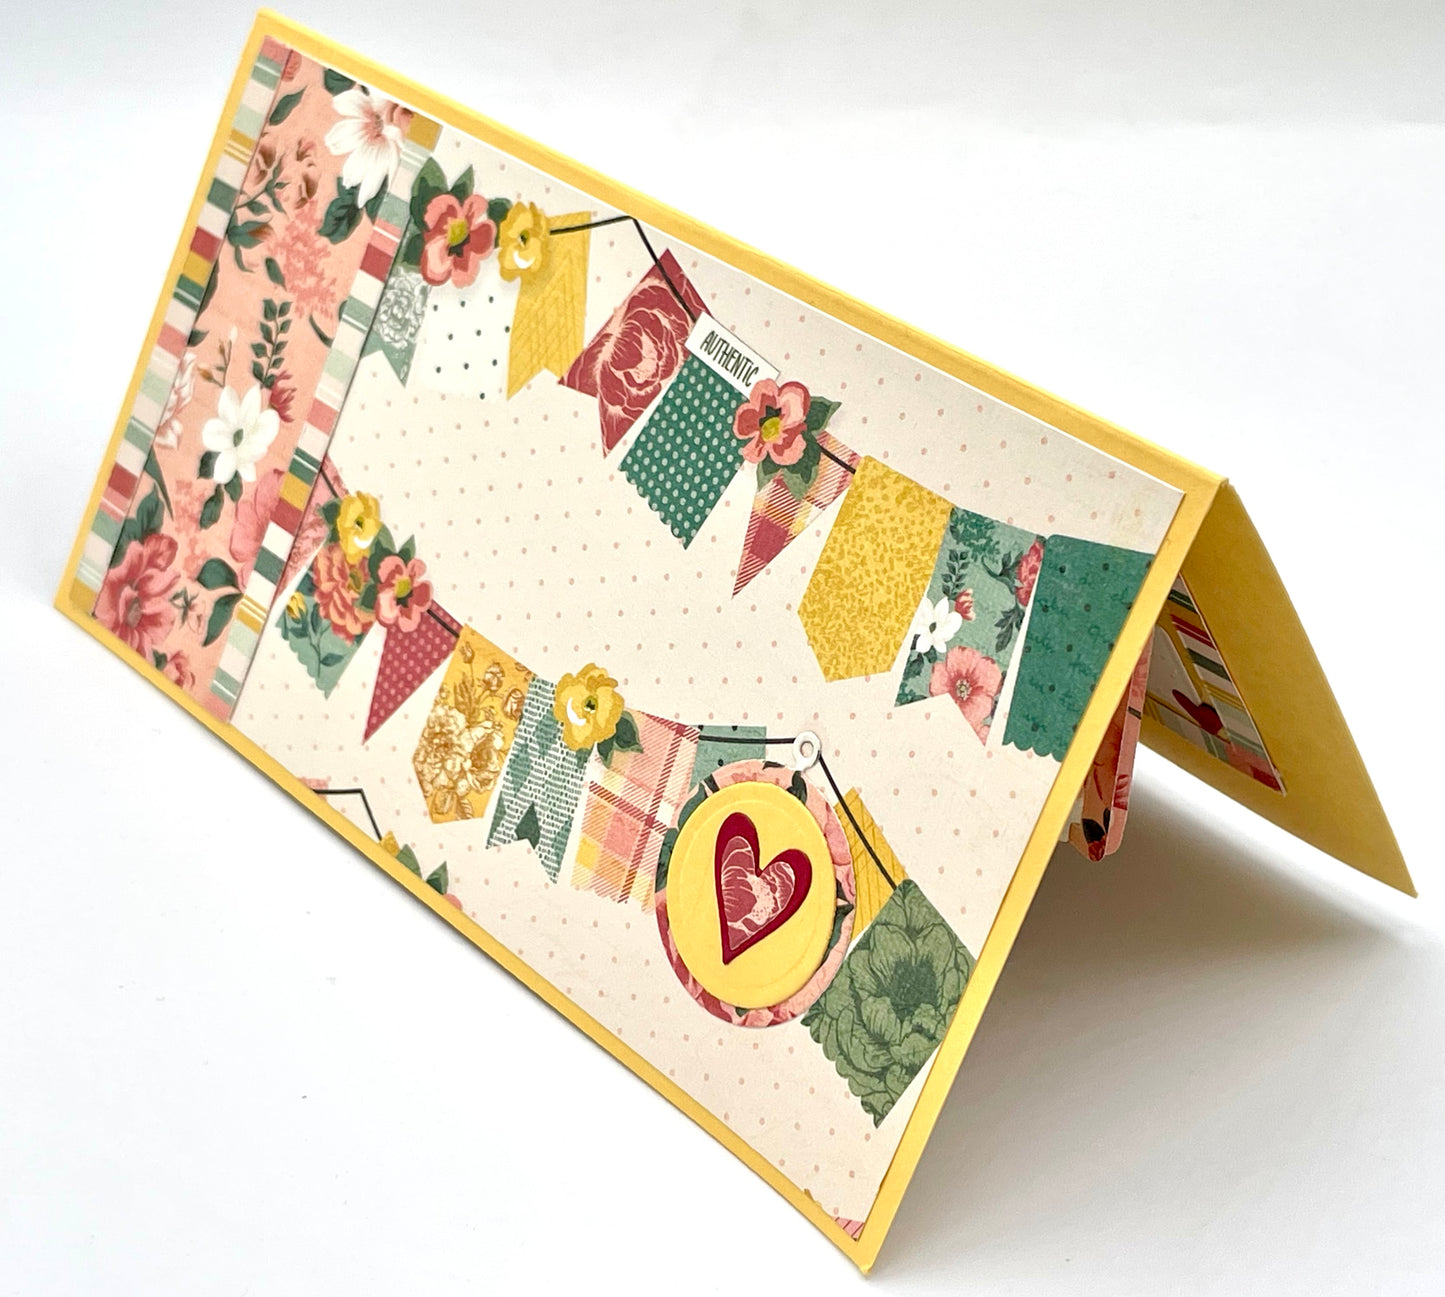 Karen Burniston - Card Kits - Sending Hugs Pop-up Card